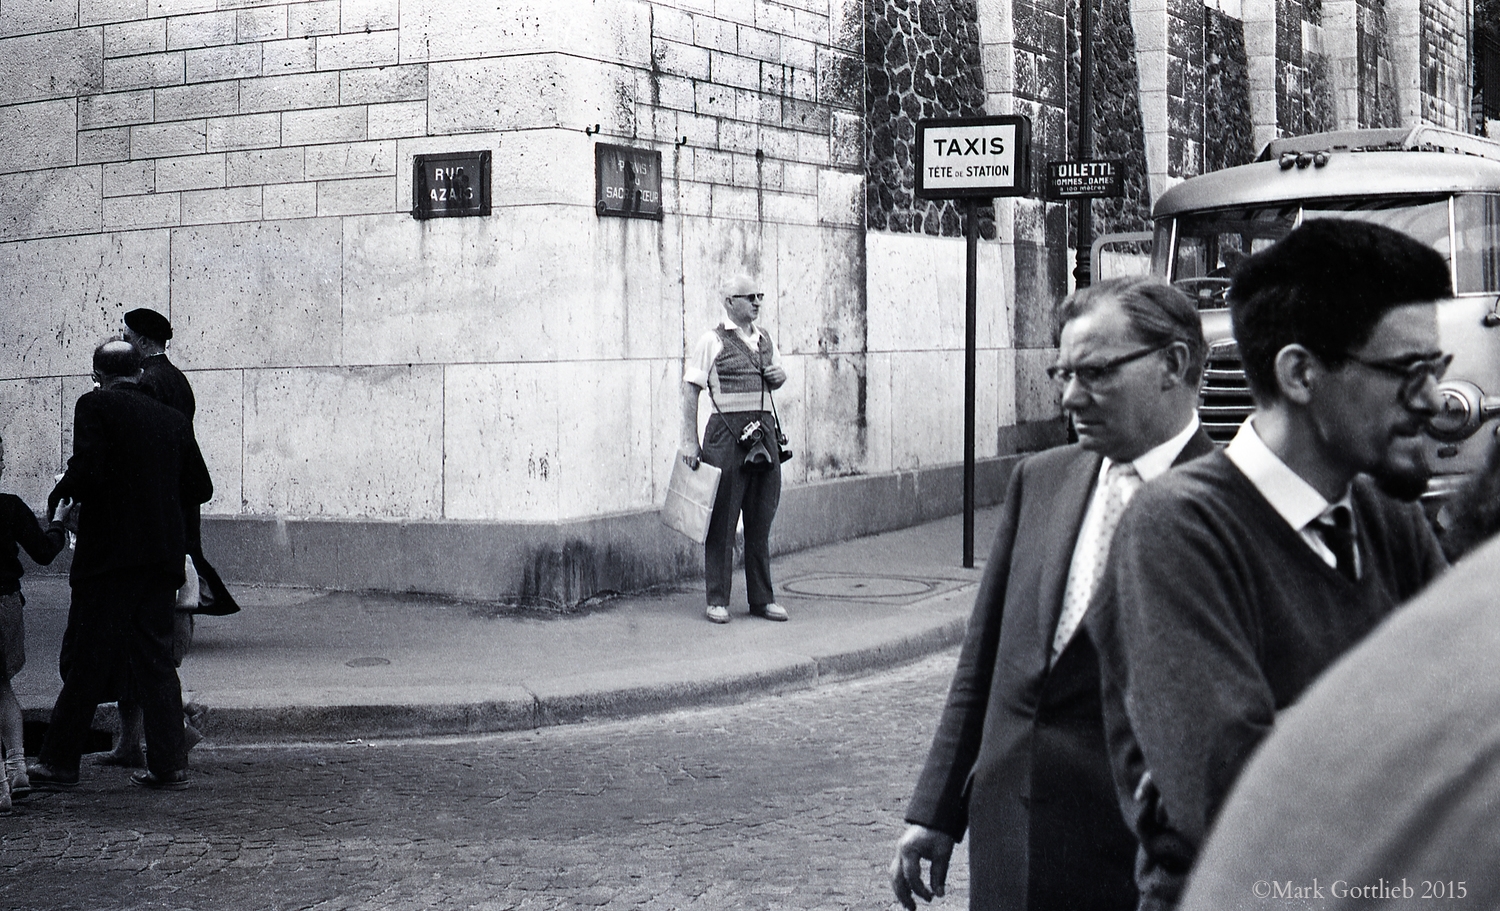 An American in Paris, 1960